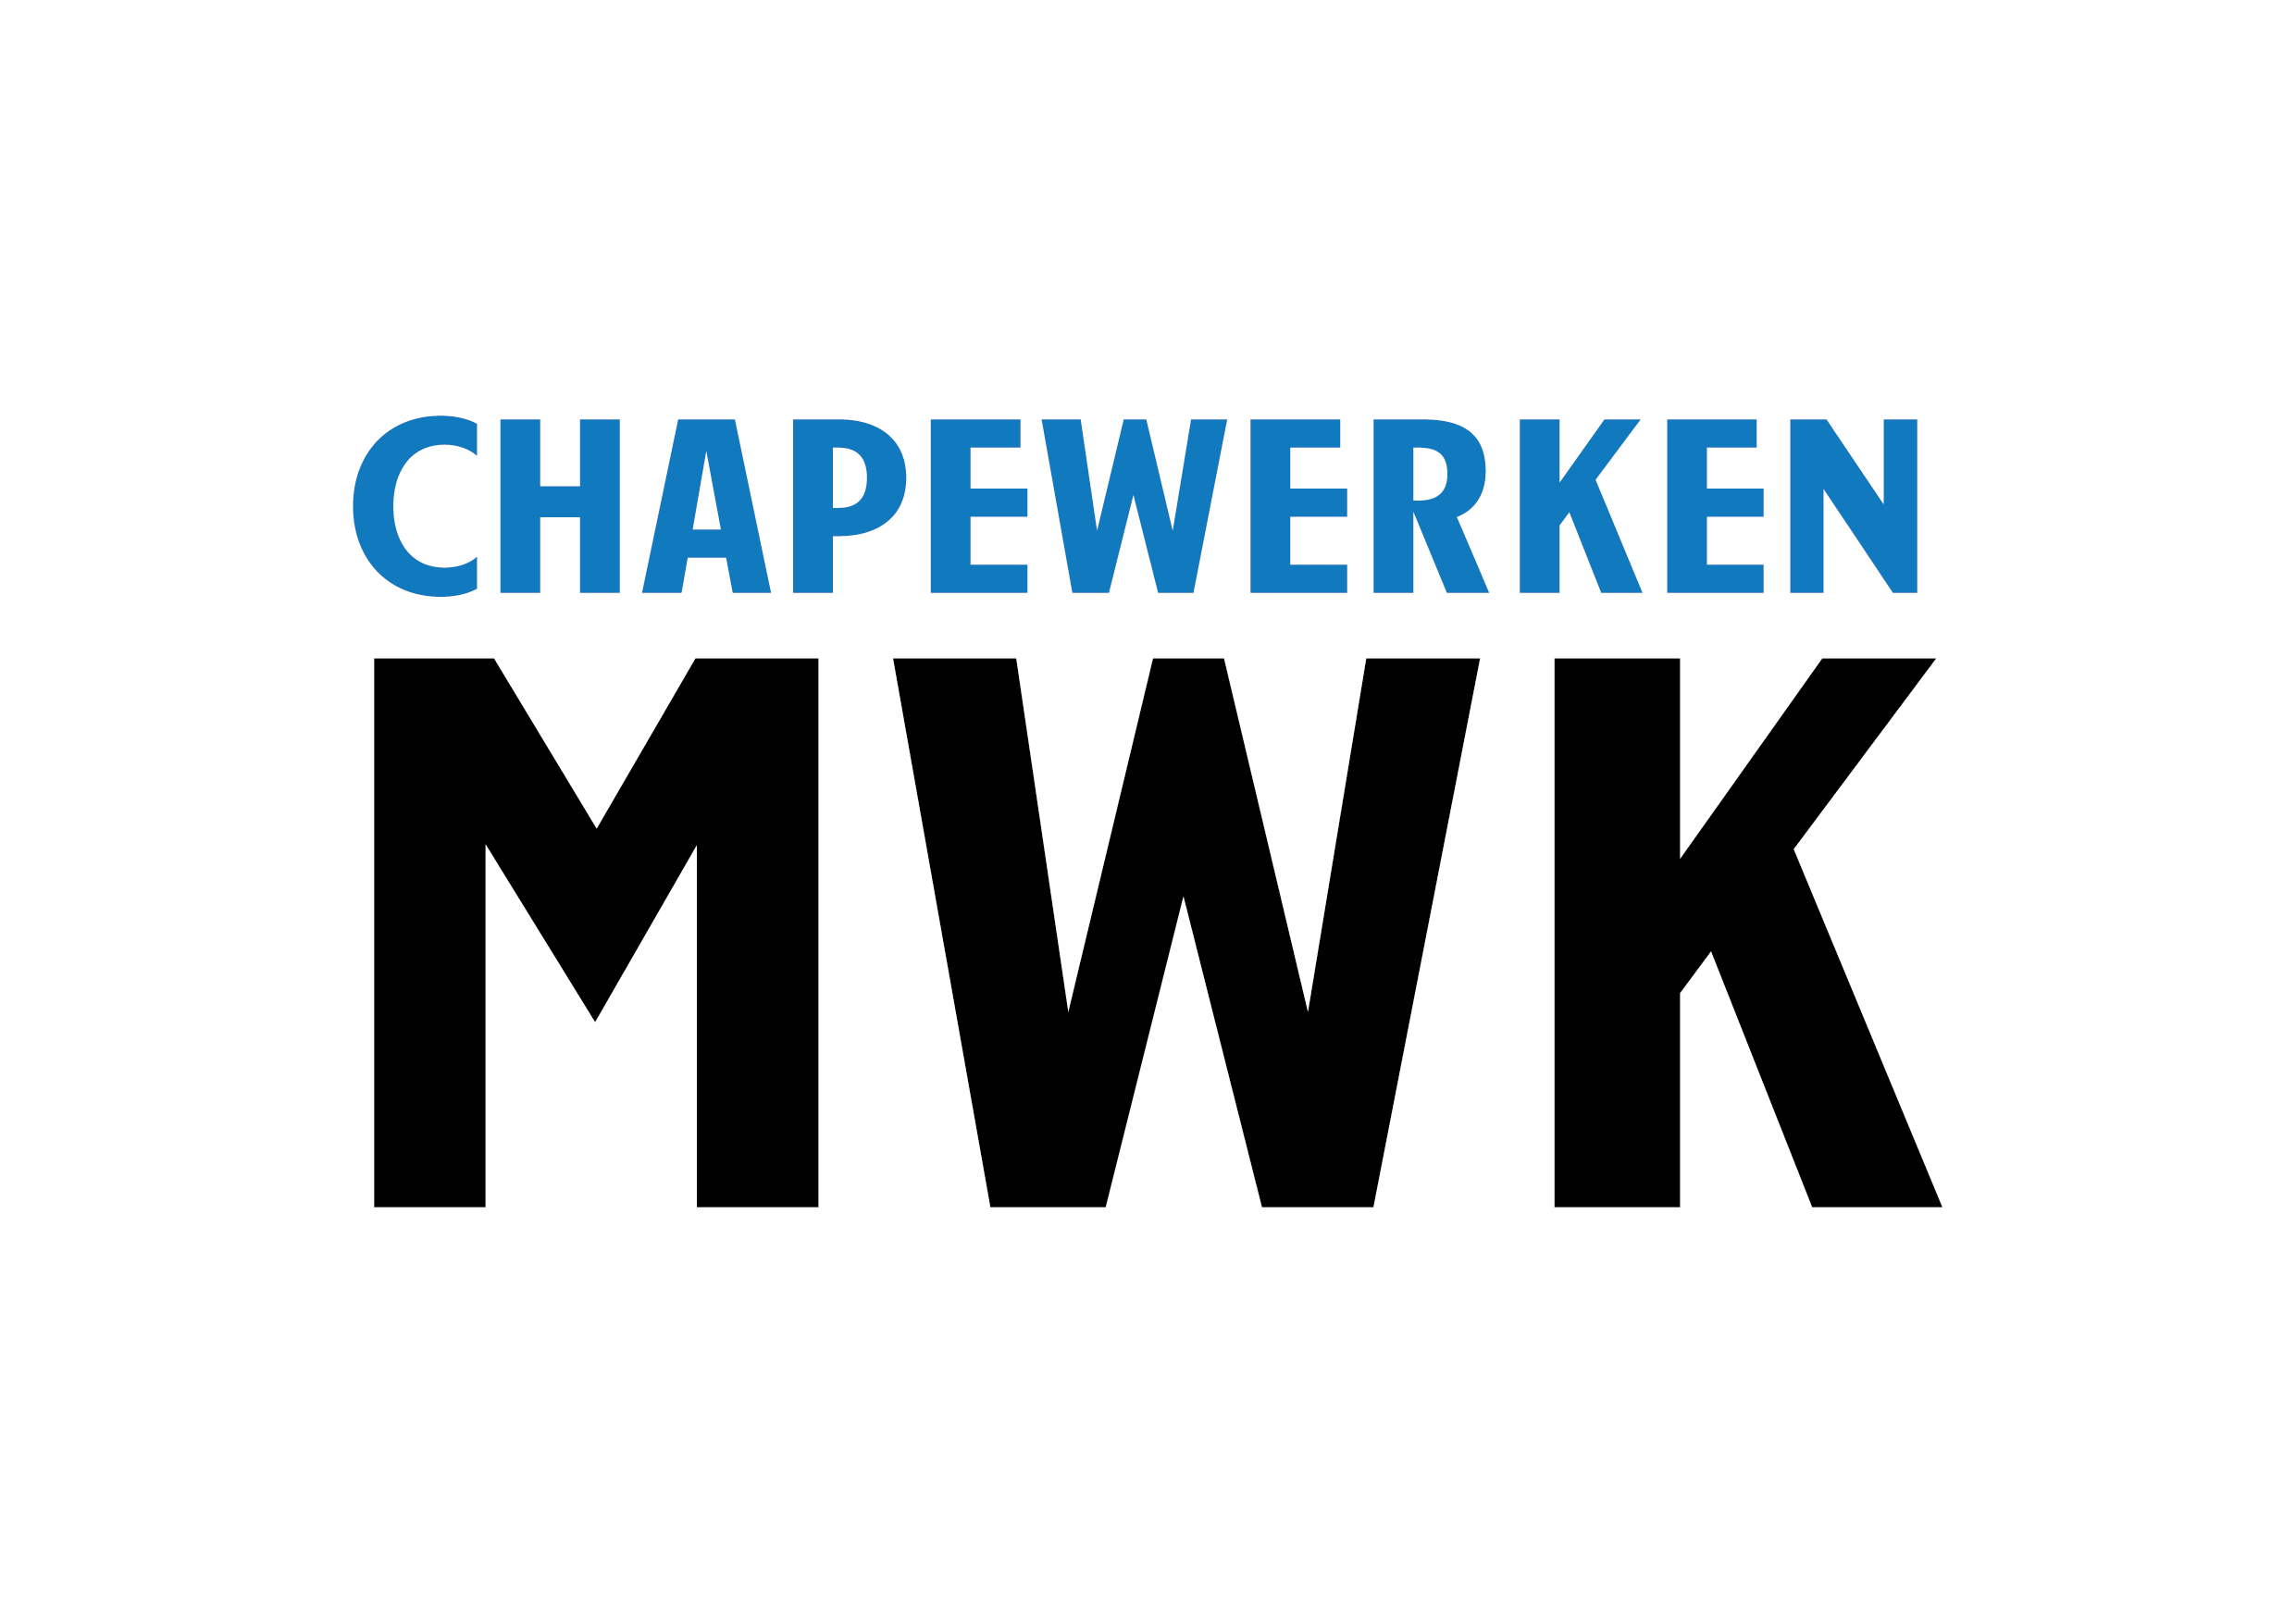 MWK Chapewerken